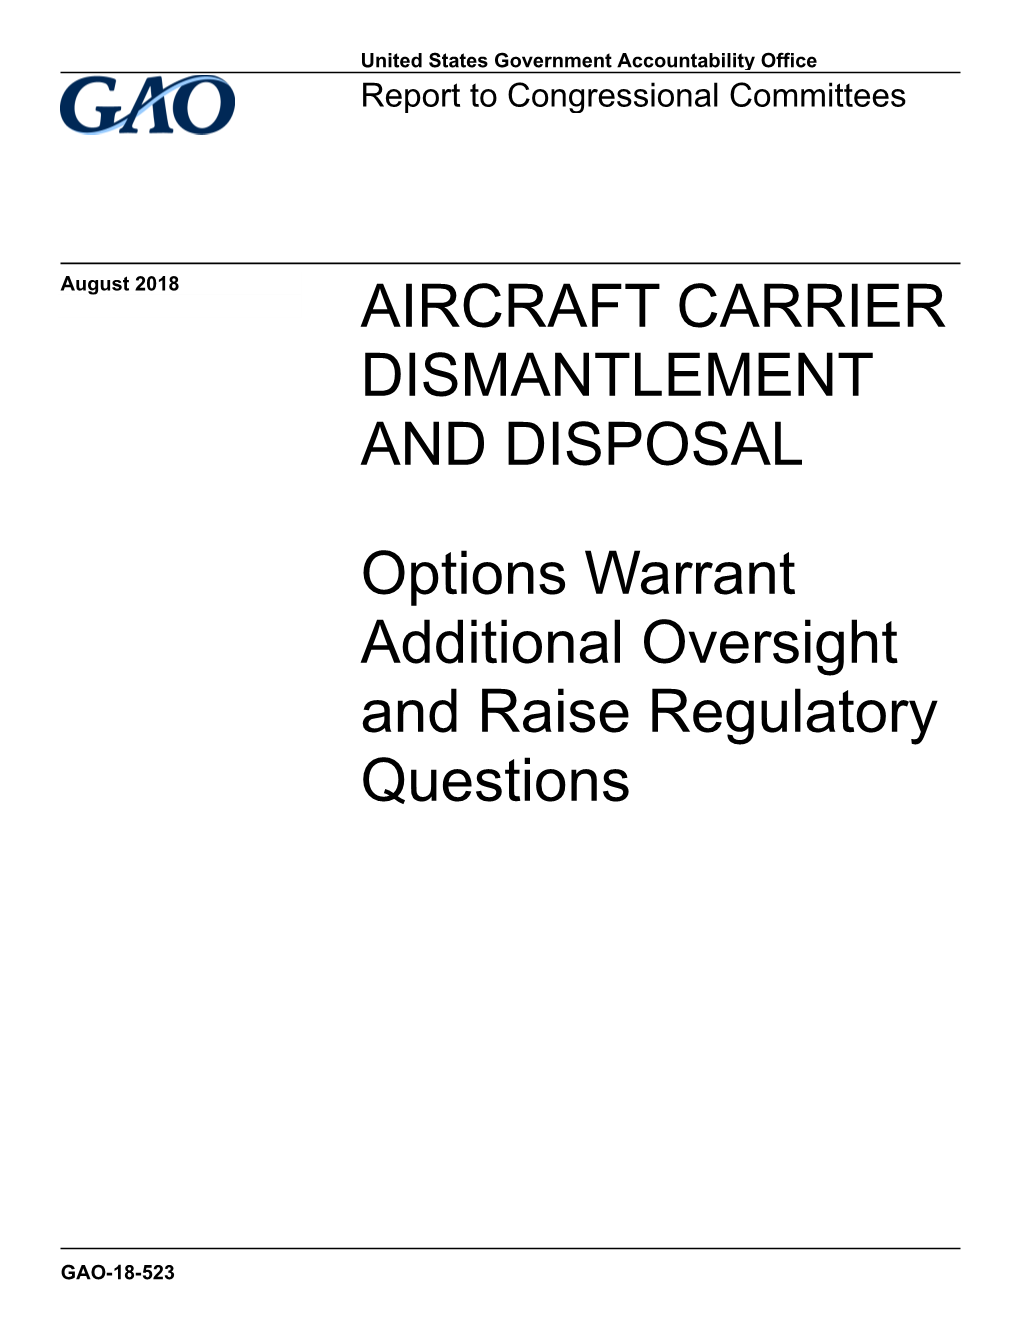 Gao-18-523, Aircraft Carrier Dismantlement and Disposal